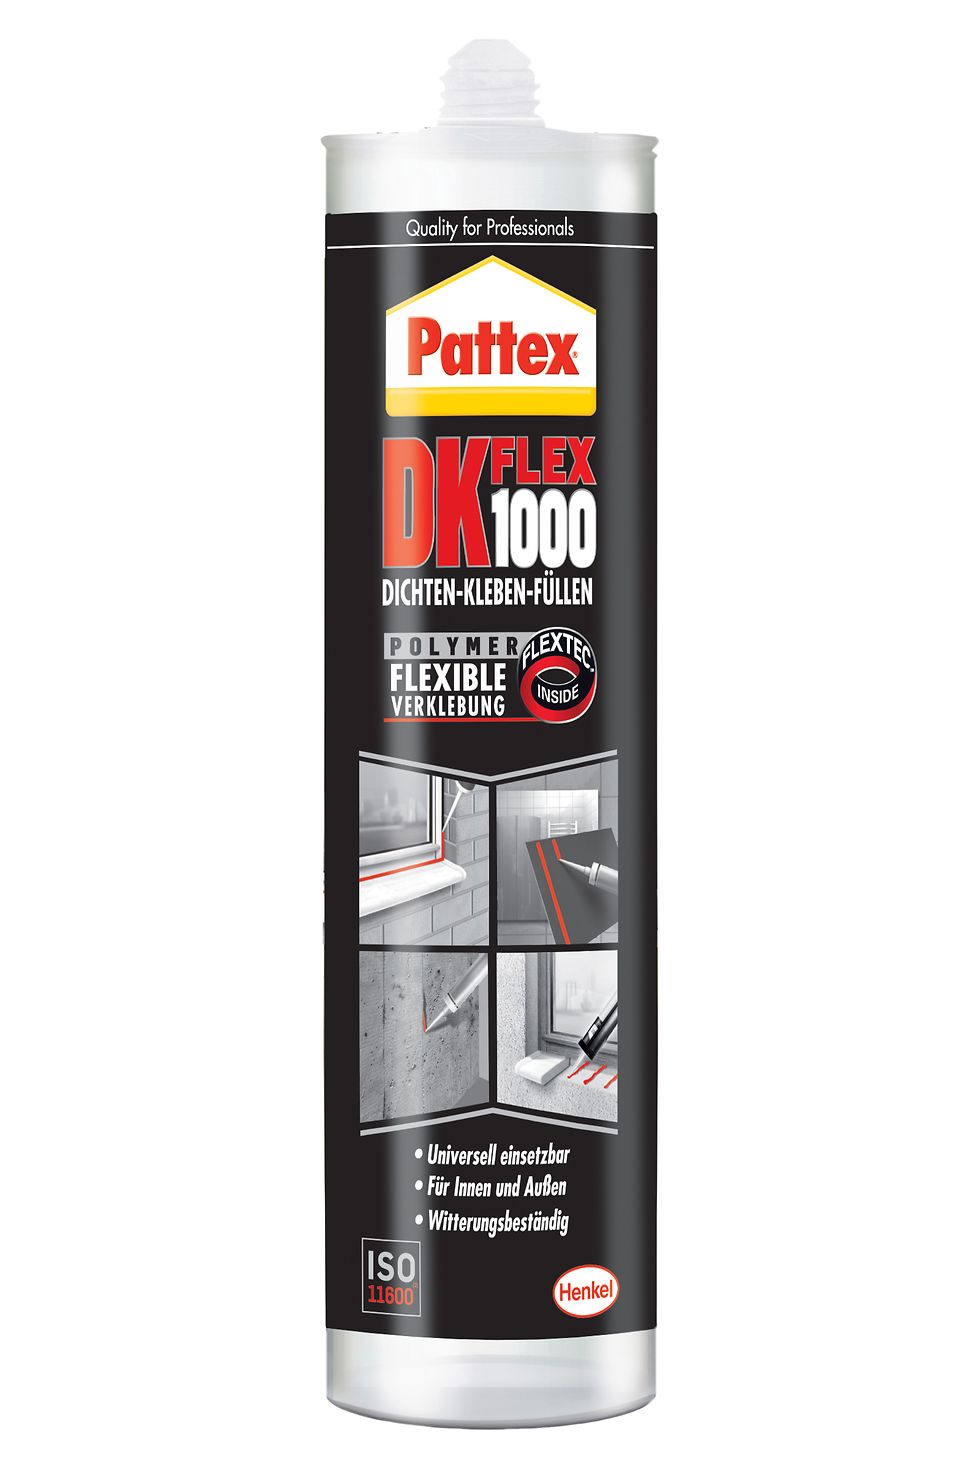 Pattex DK Flex 1000 